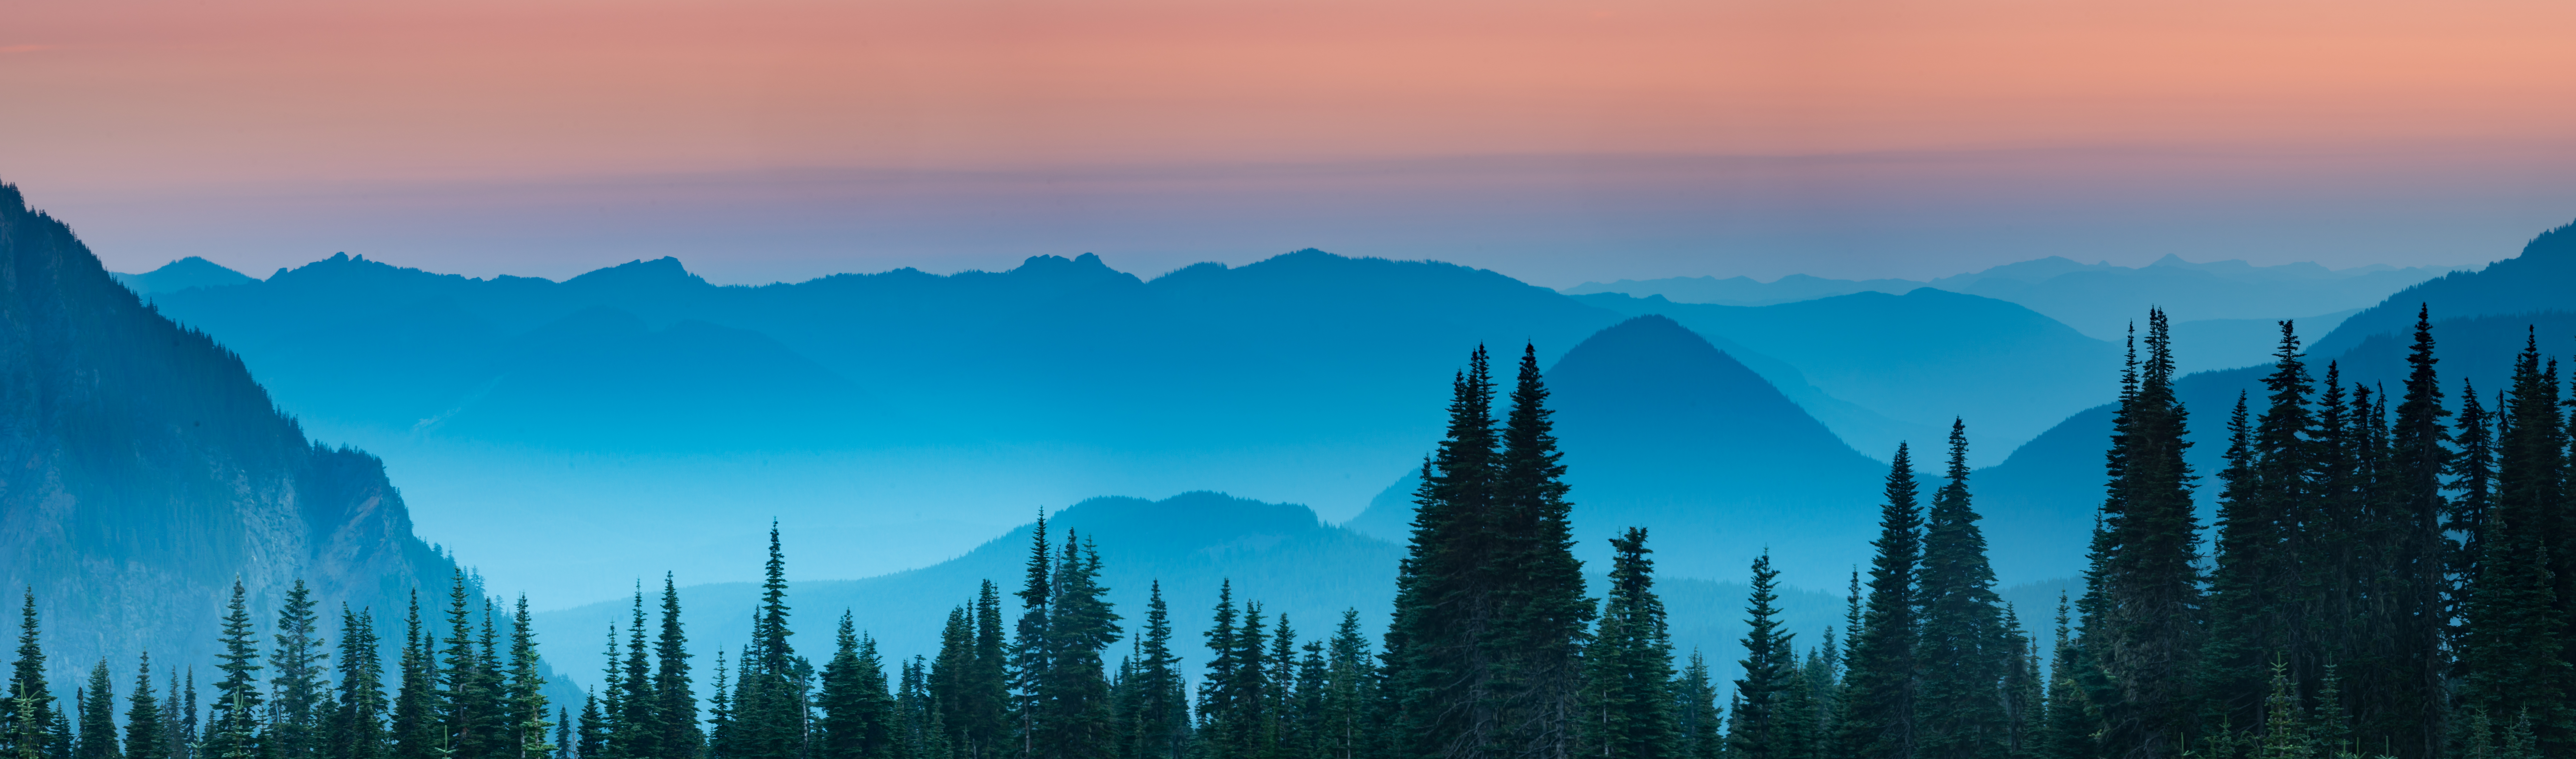 Cascade mountains skyline at sunset